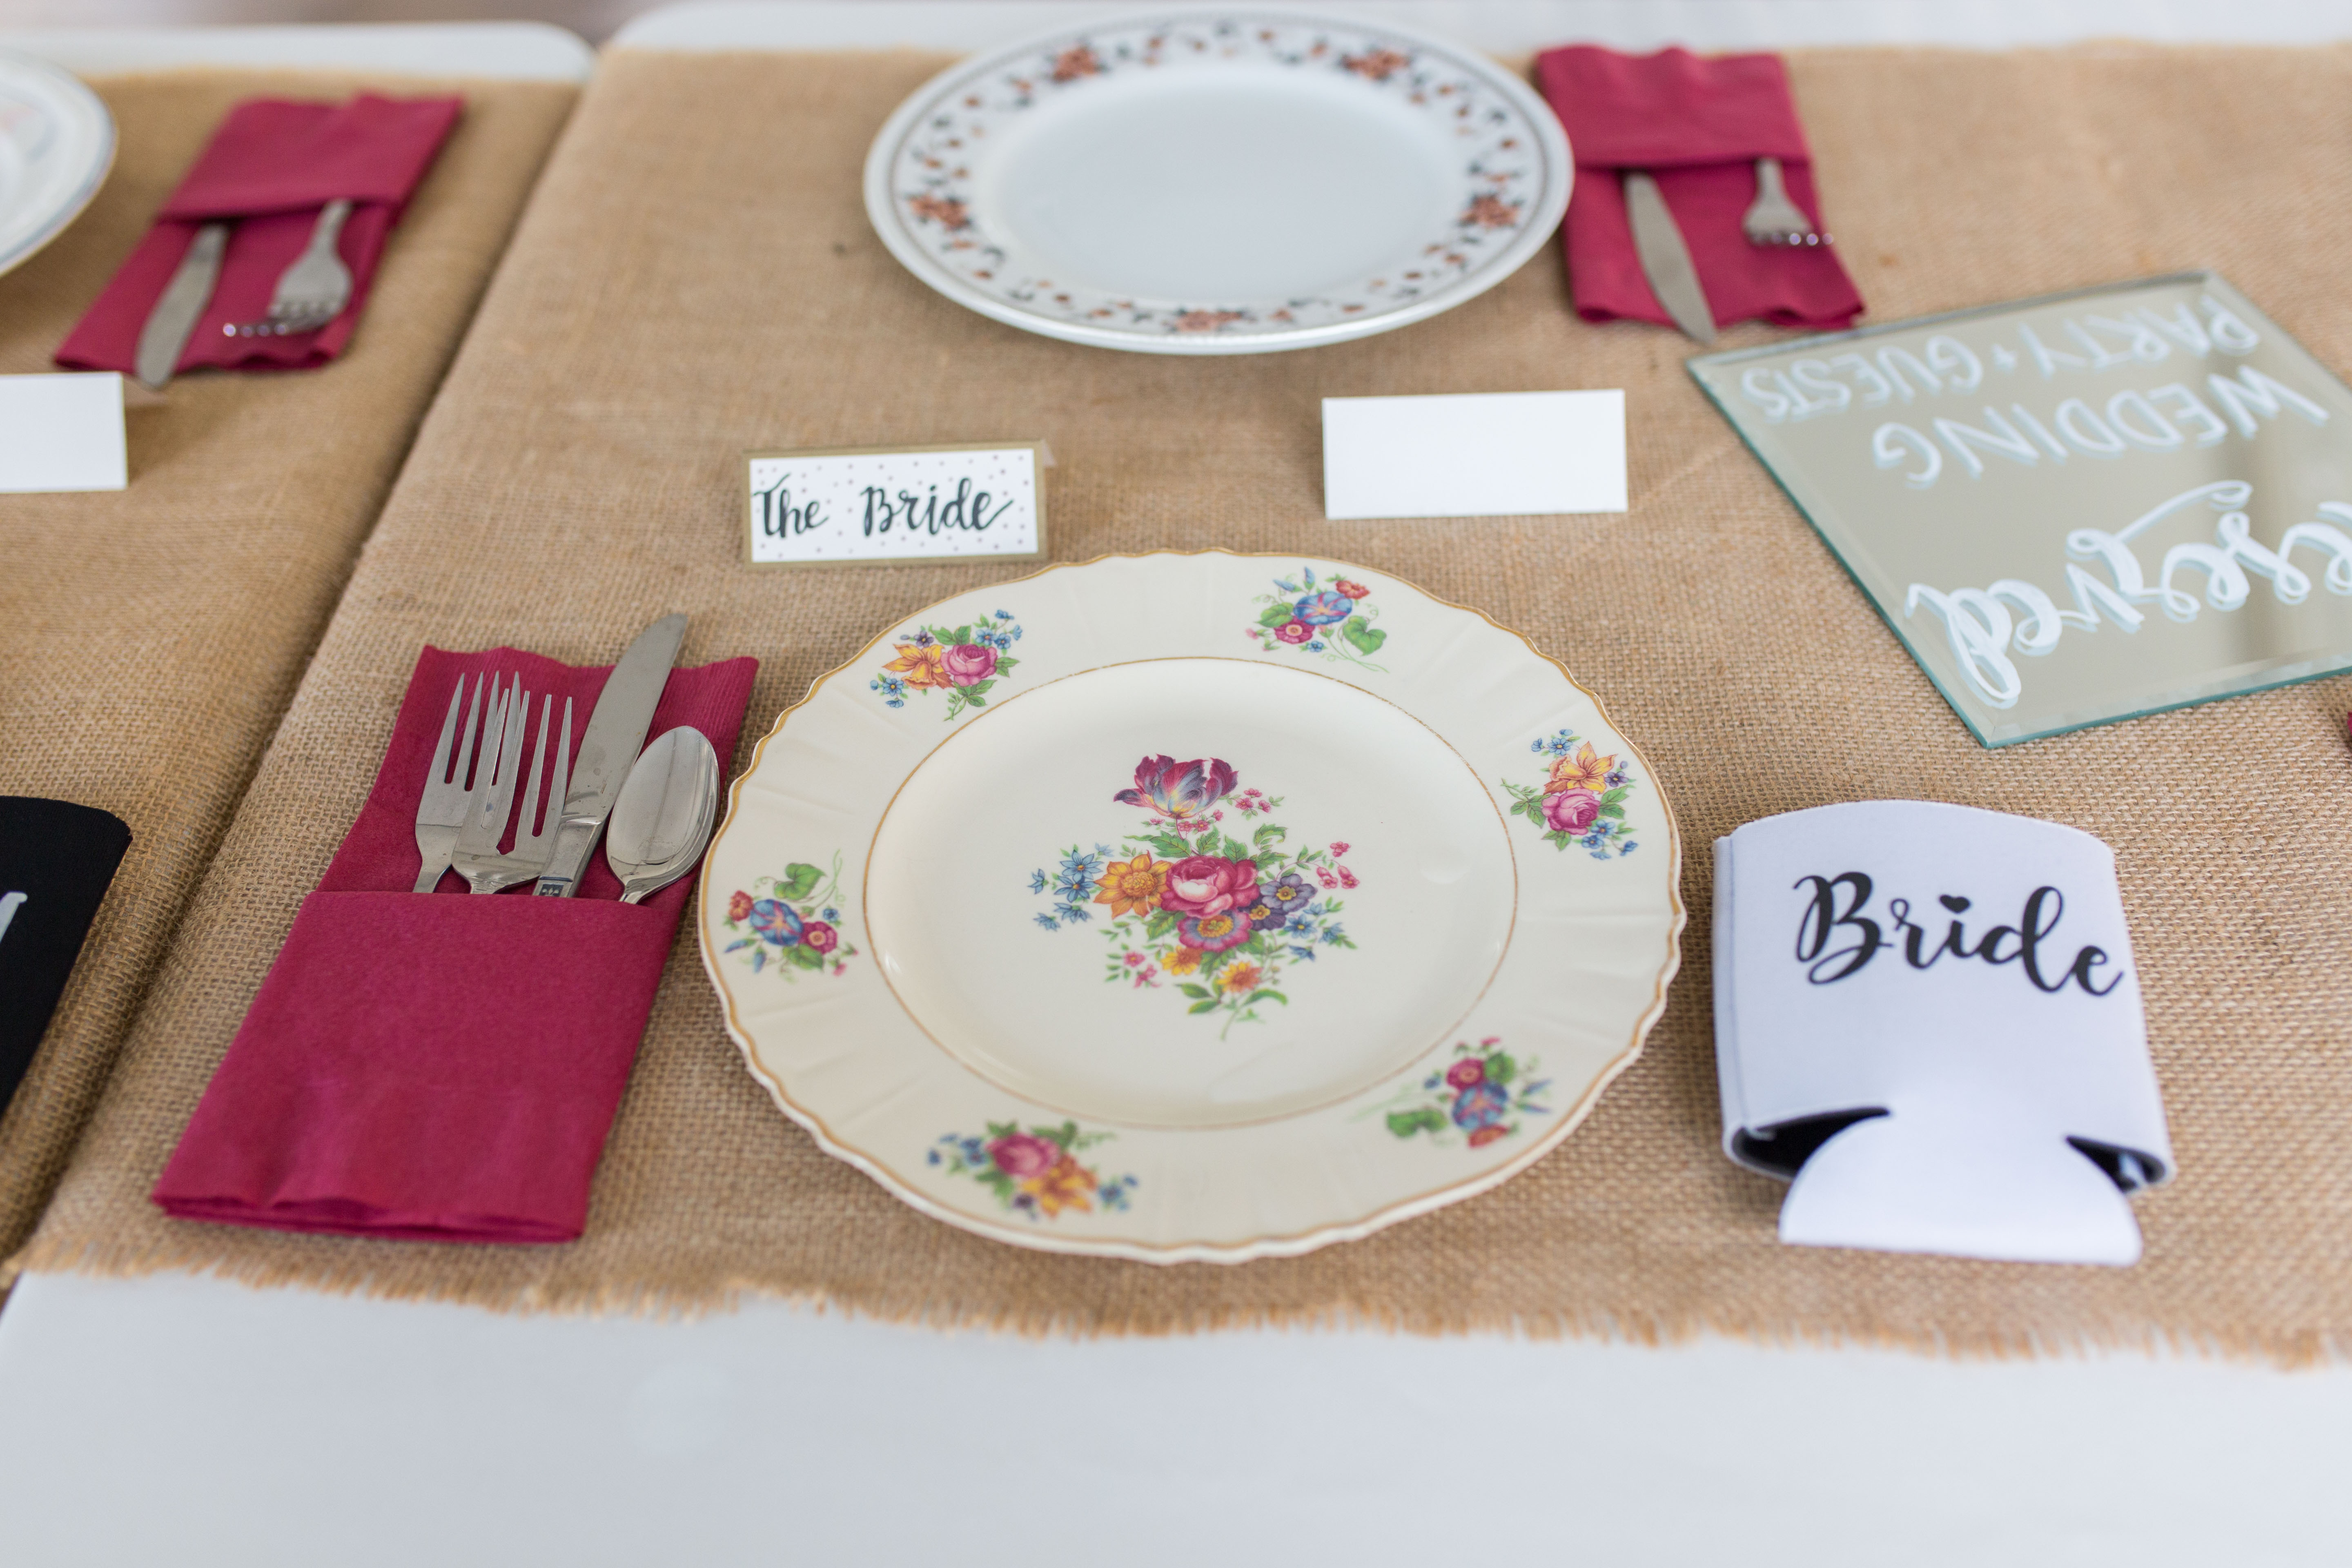 Antique plate set up at wedding reception